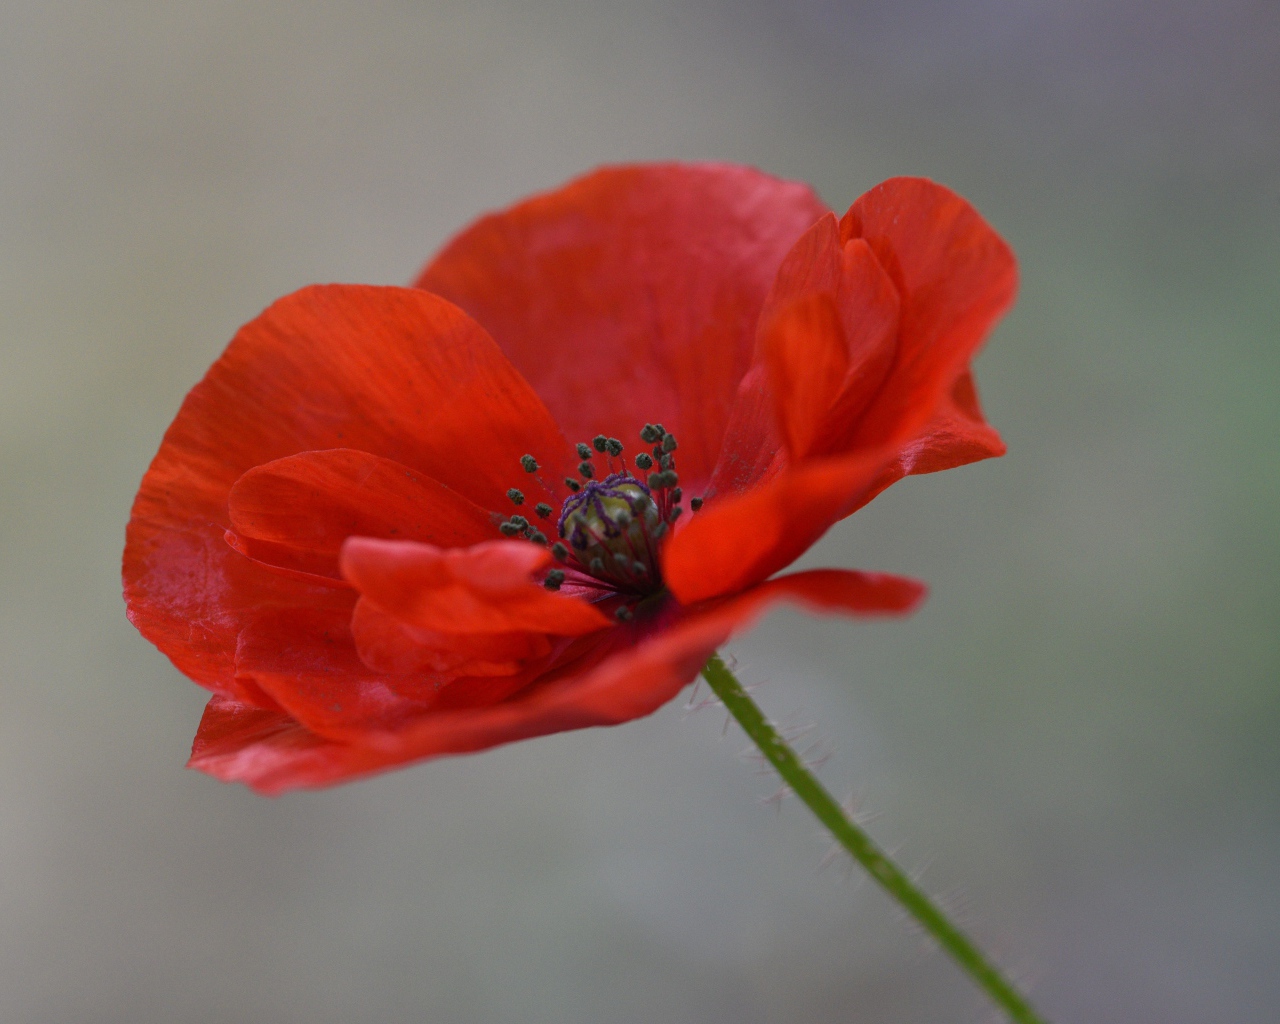 Red field poppy flower close up